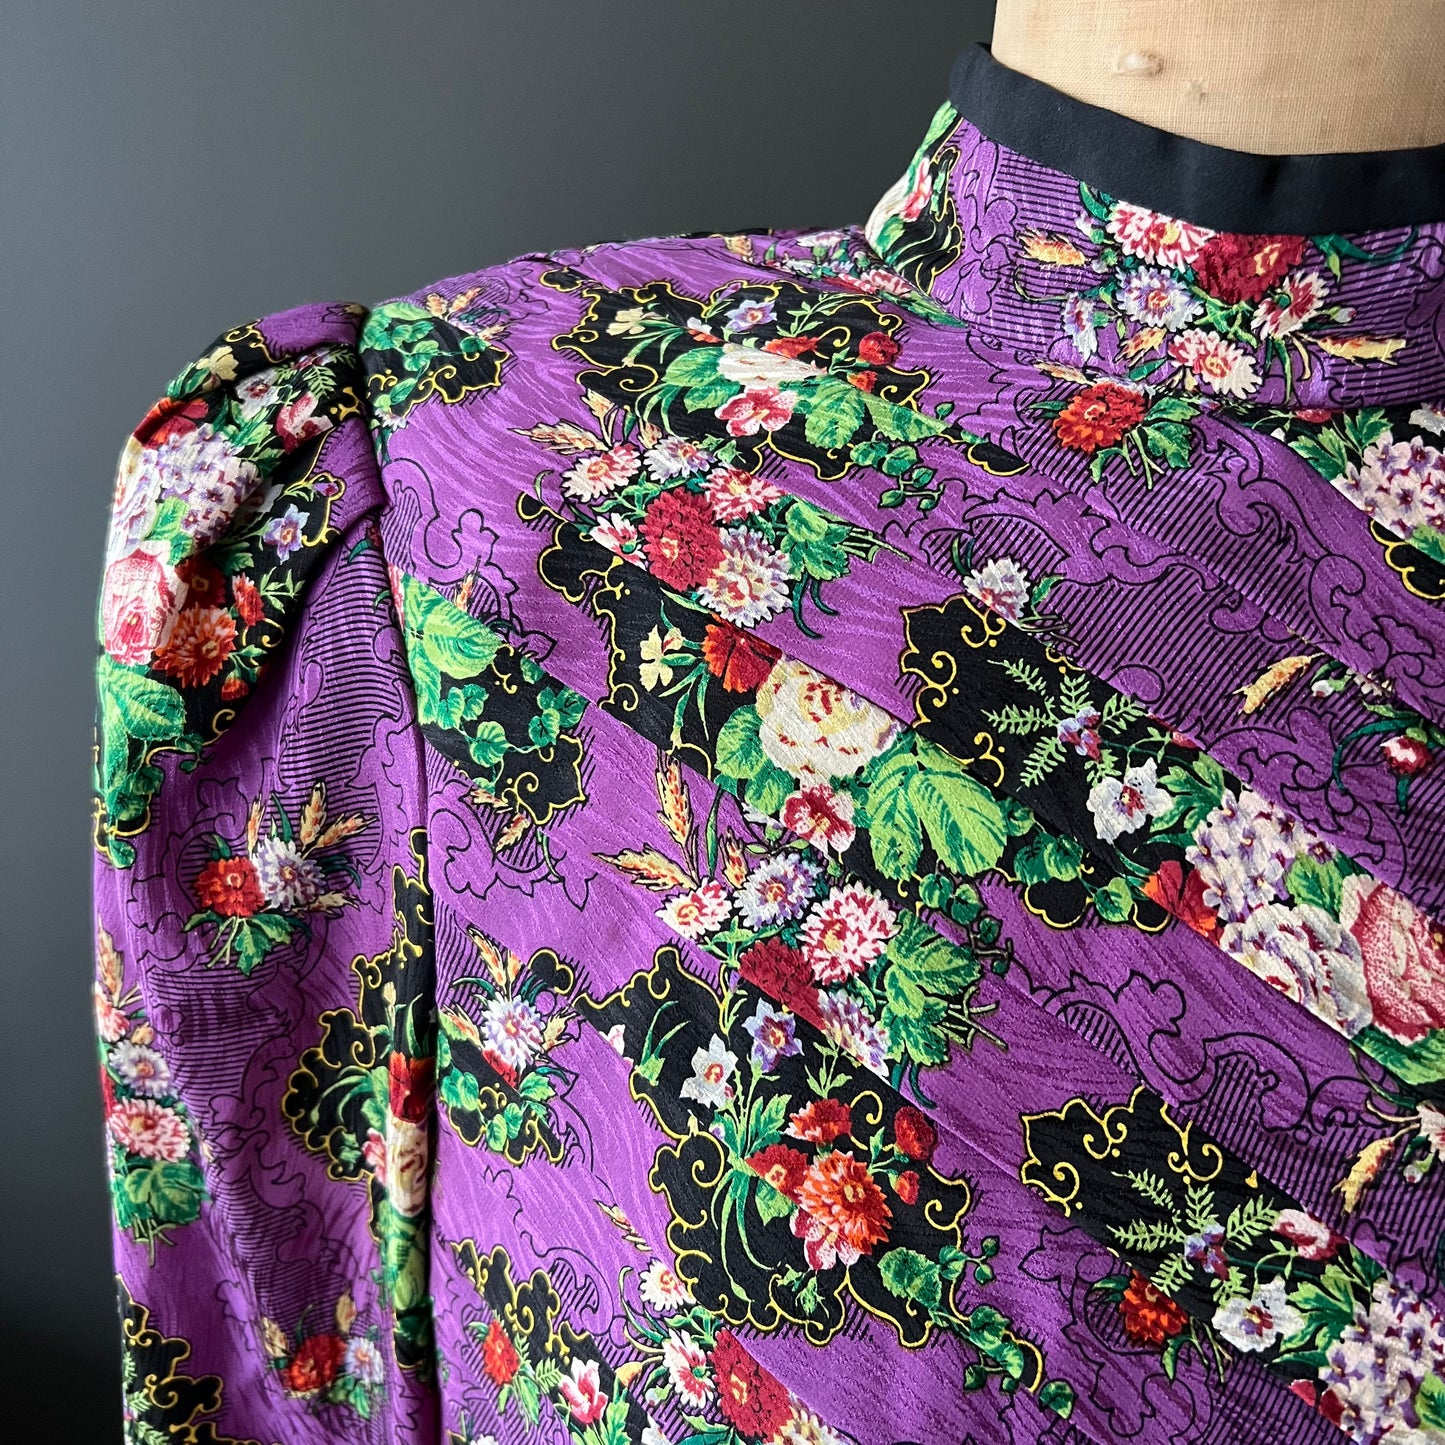 Gorgeous Vintage Saks Fifth Avenue Silk Floral Blouse Designed by Richard Warren 12